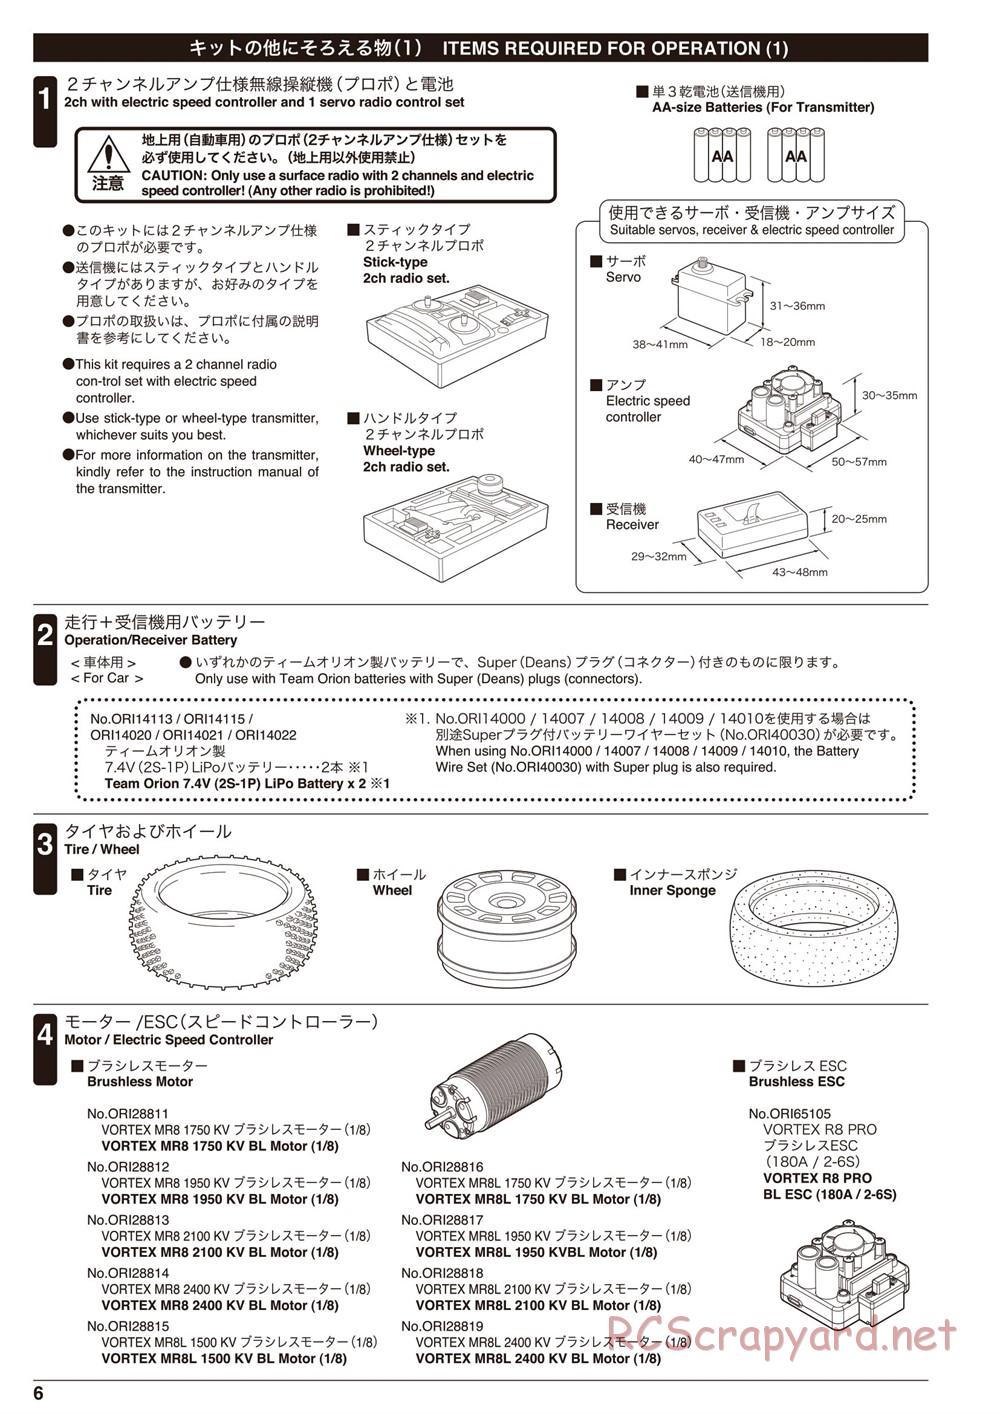 Kyosho - Inferno MP9e TKI - Manual - Page 6